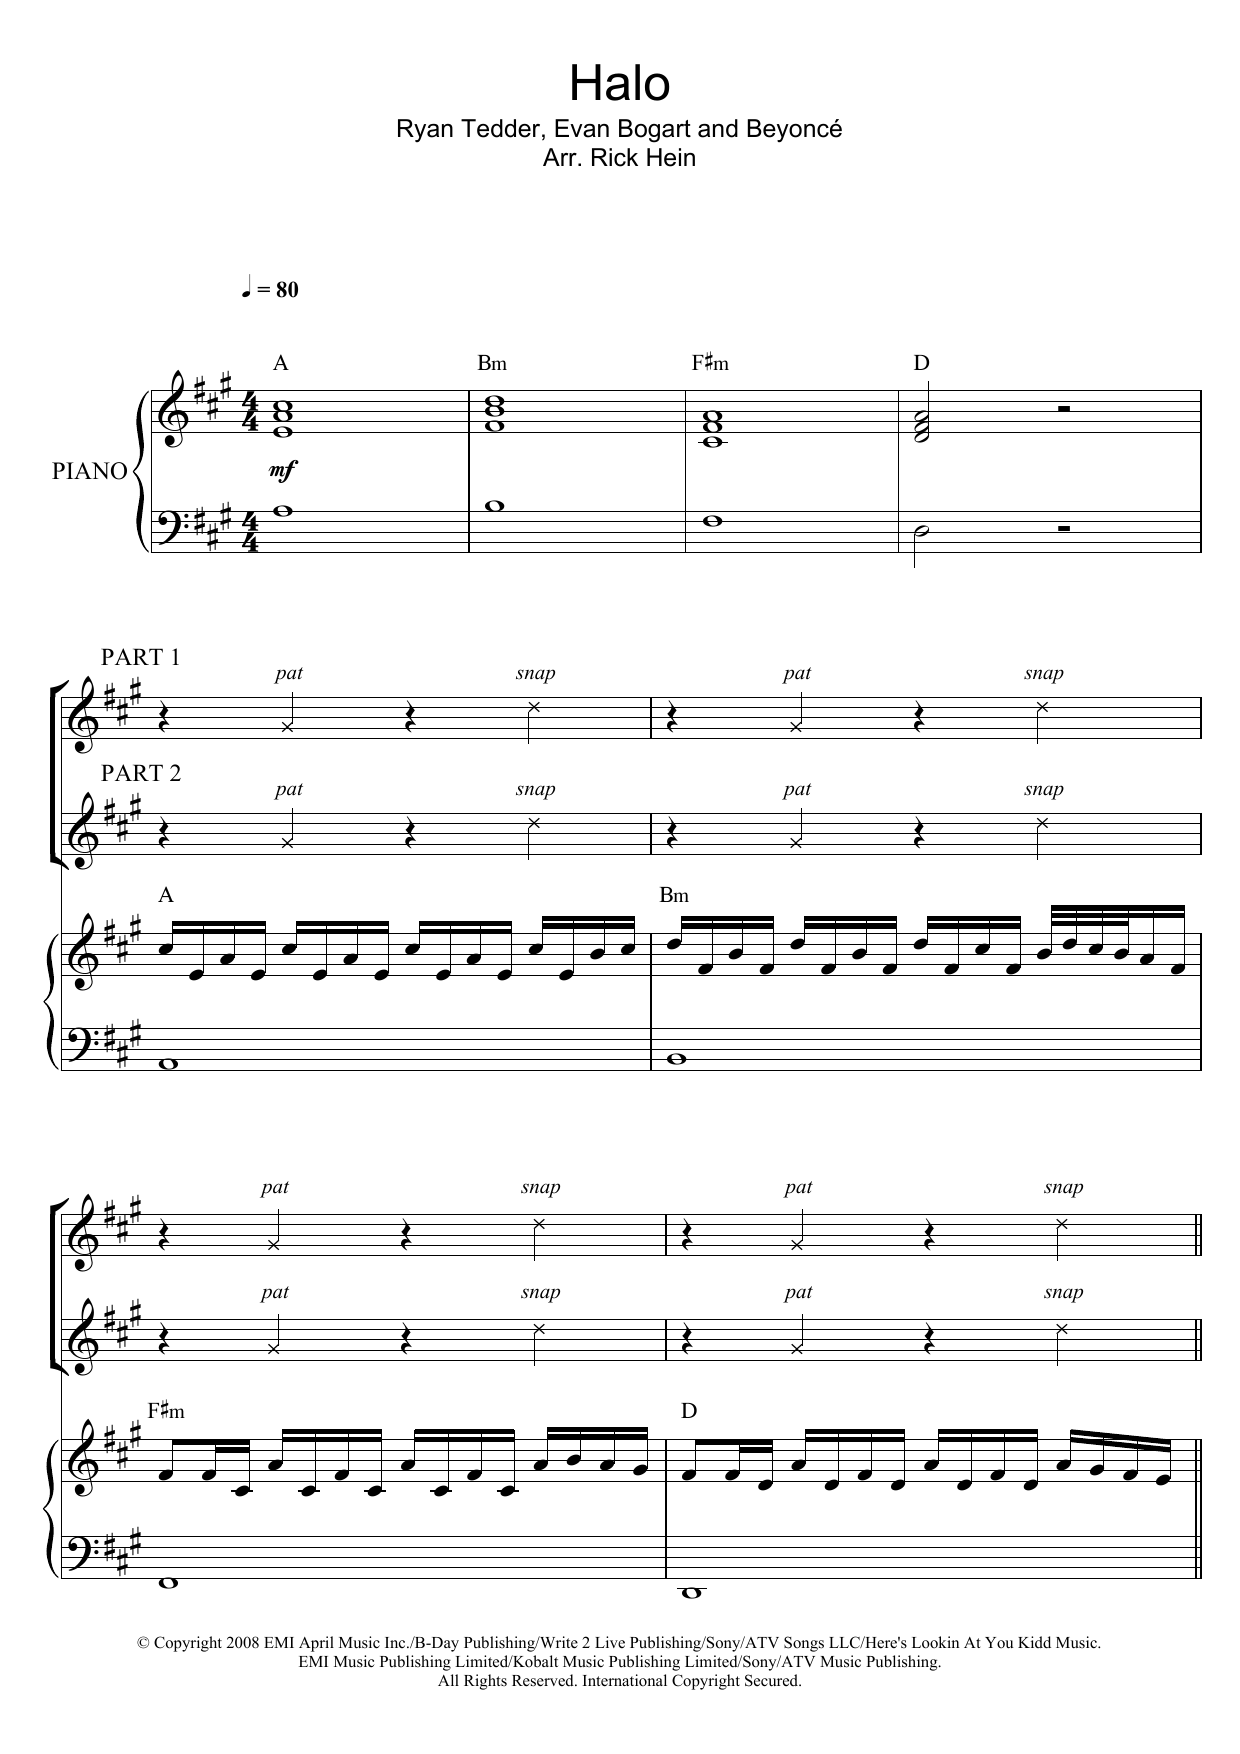 Beyoncé Halo (arr. Rick Hein) Sheet Music Notes & Chords for 2-Part Choir - Download or Print PDF